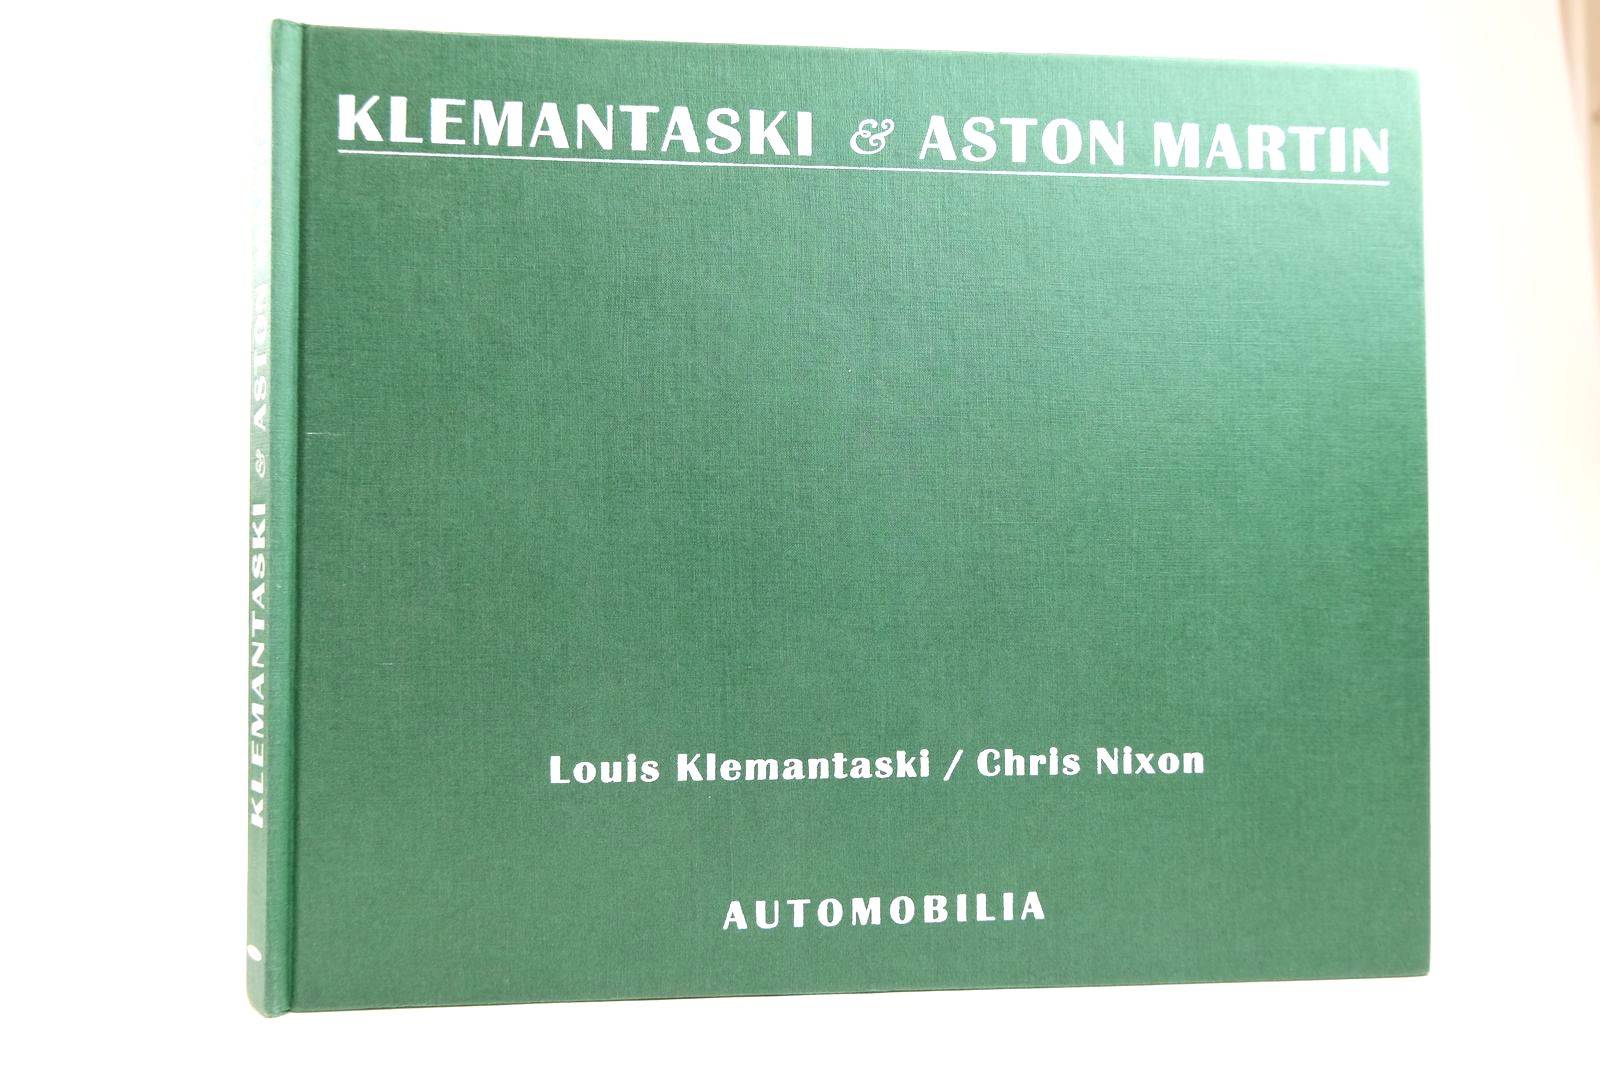 Photo of KLEMANTASKI & ASTON MARTIN 1948-1959 written by Klemantaski, Louis
Nixon, Chris published by Automobilia (STOCK CODE: 2131778)  for sale by Stella & Rose's Books